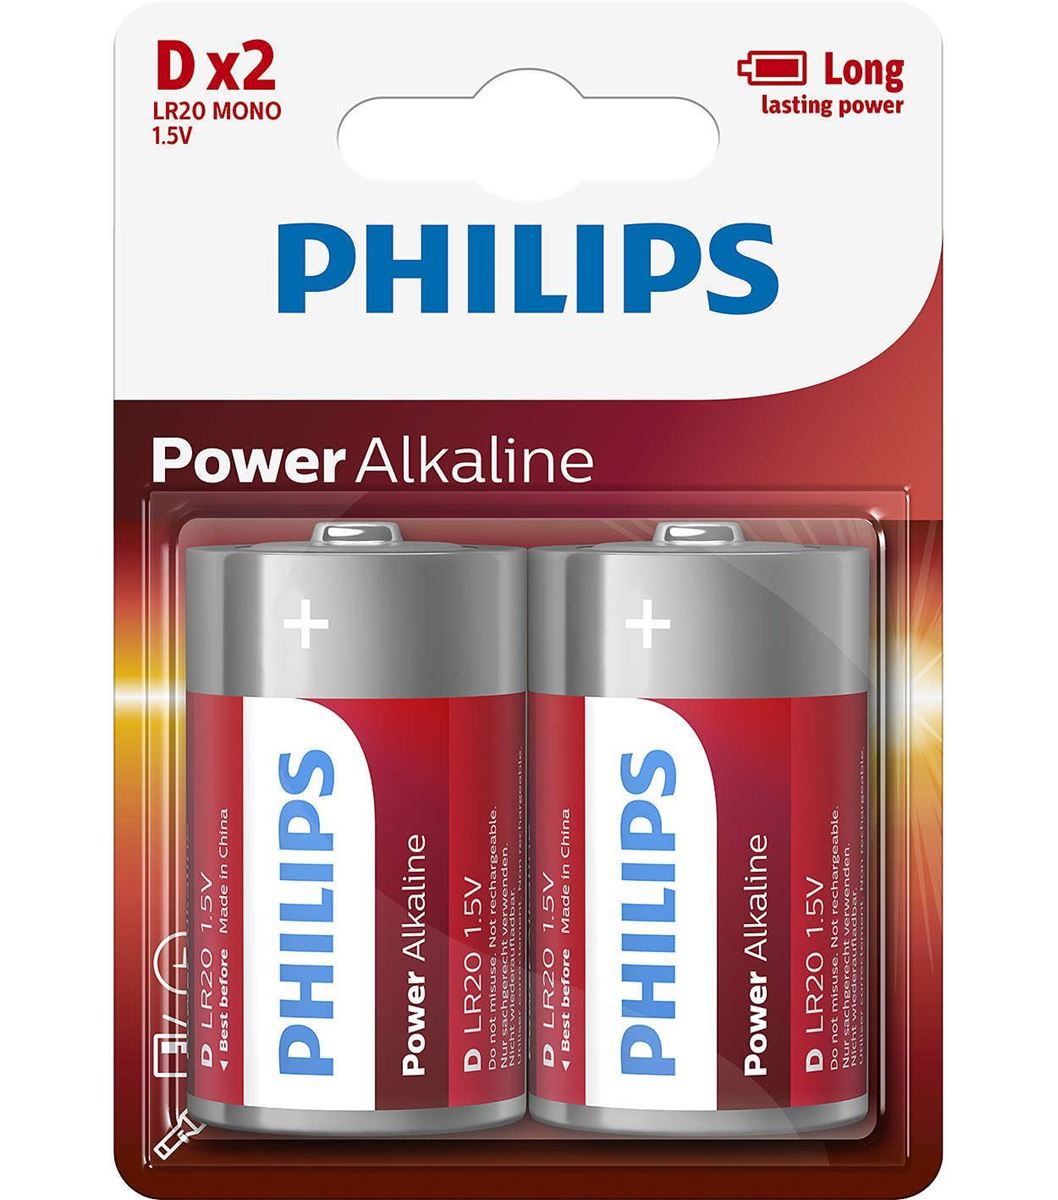 Baterie Philips 1,5V POWER ALKALINE, typ D, LR20, velký buřt, monočlánek